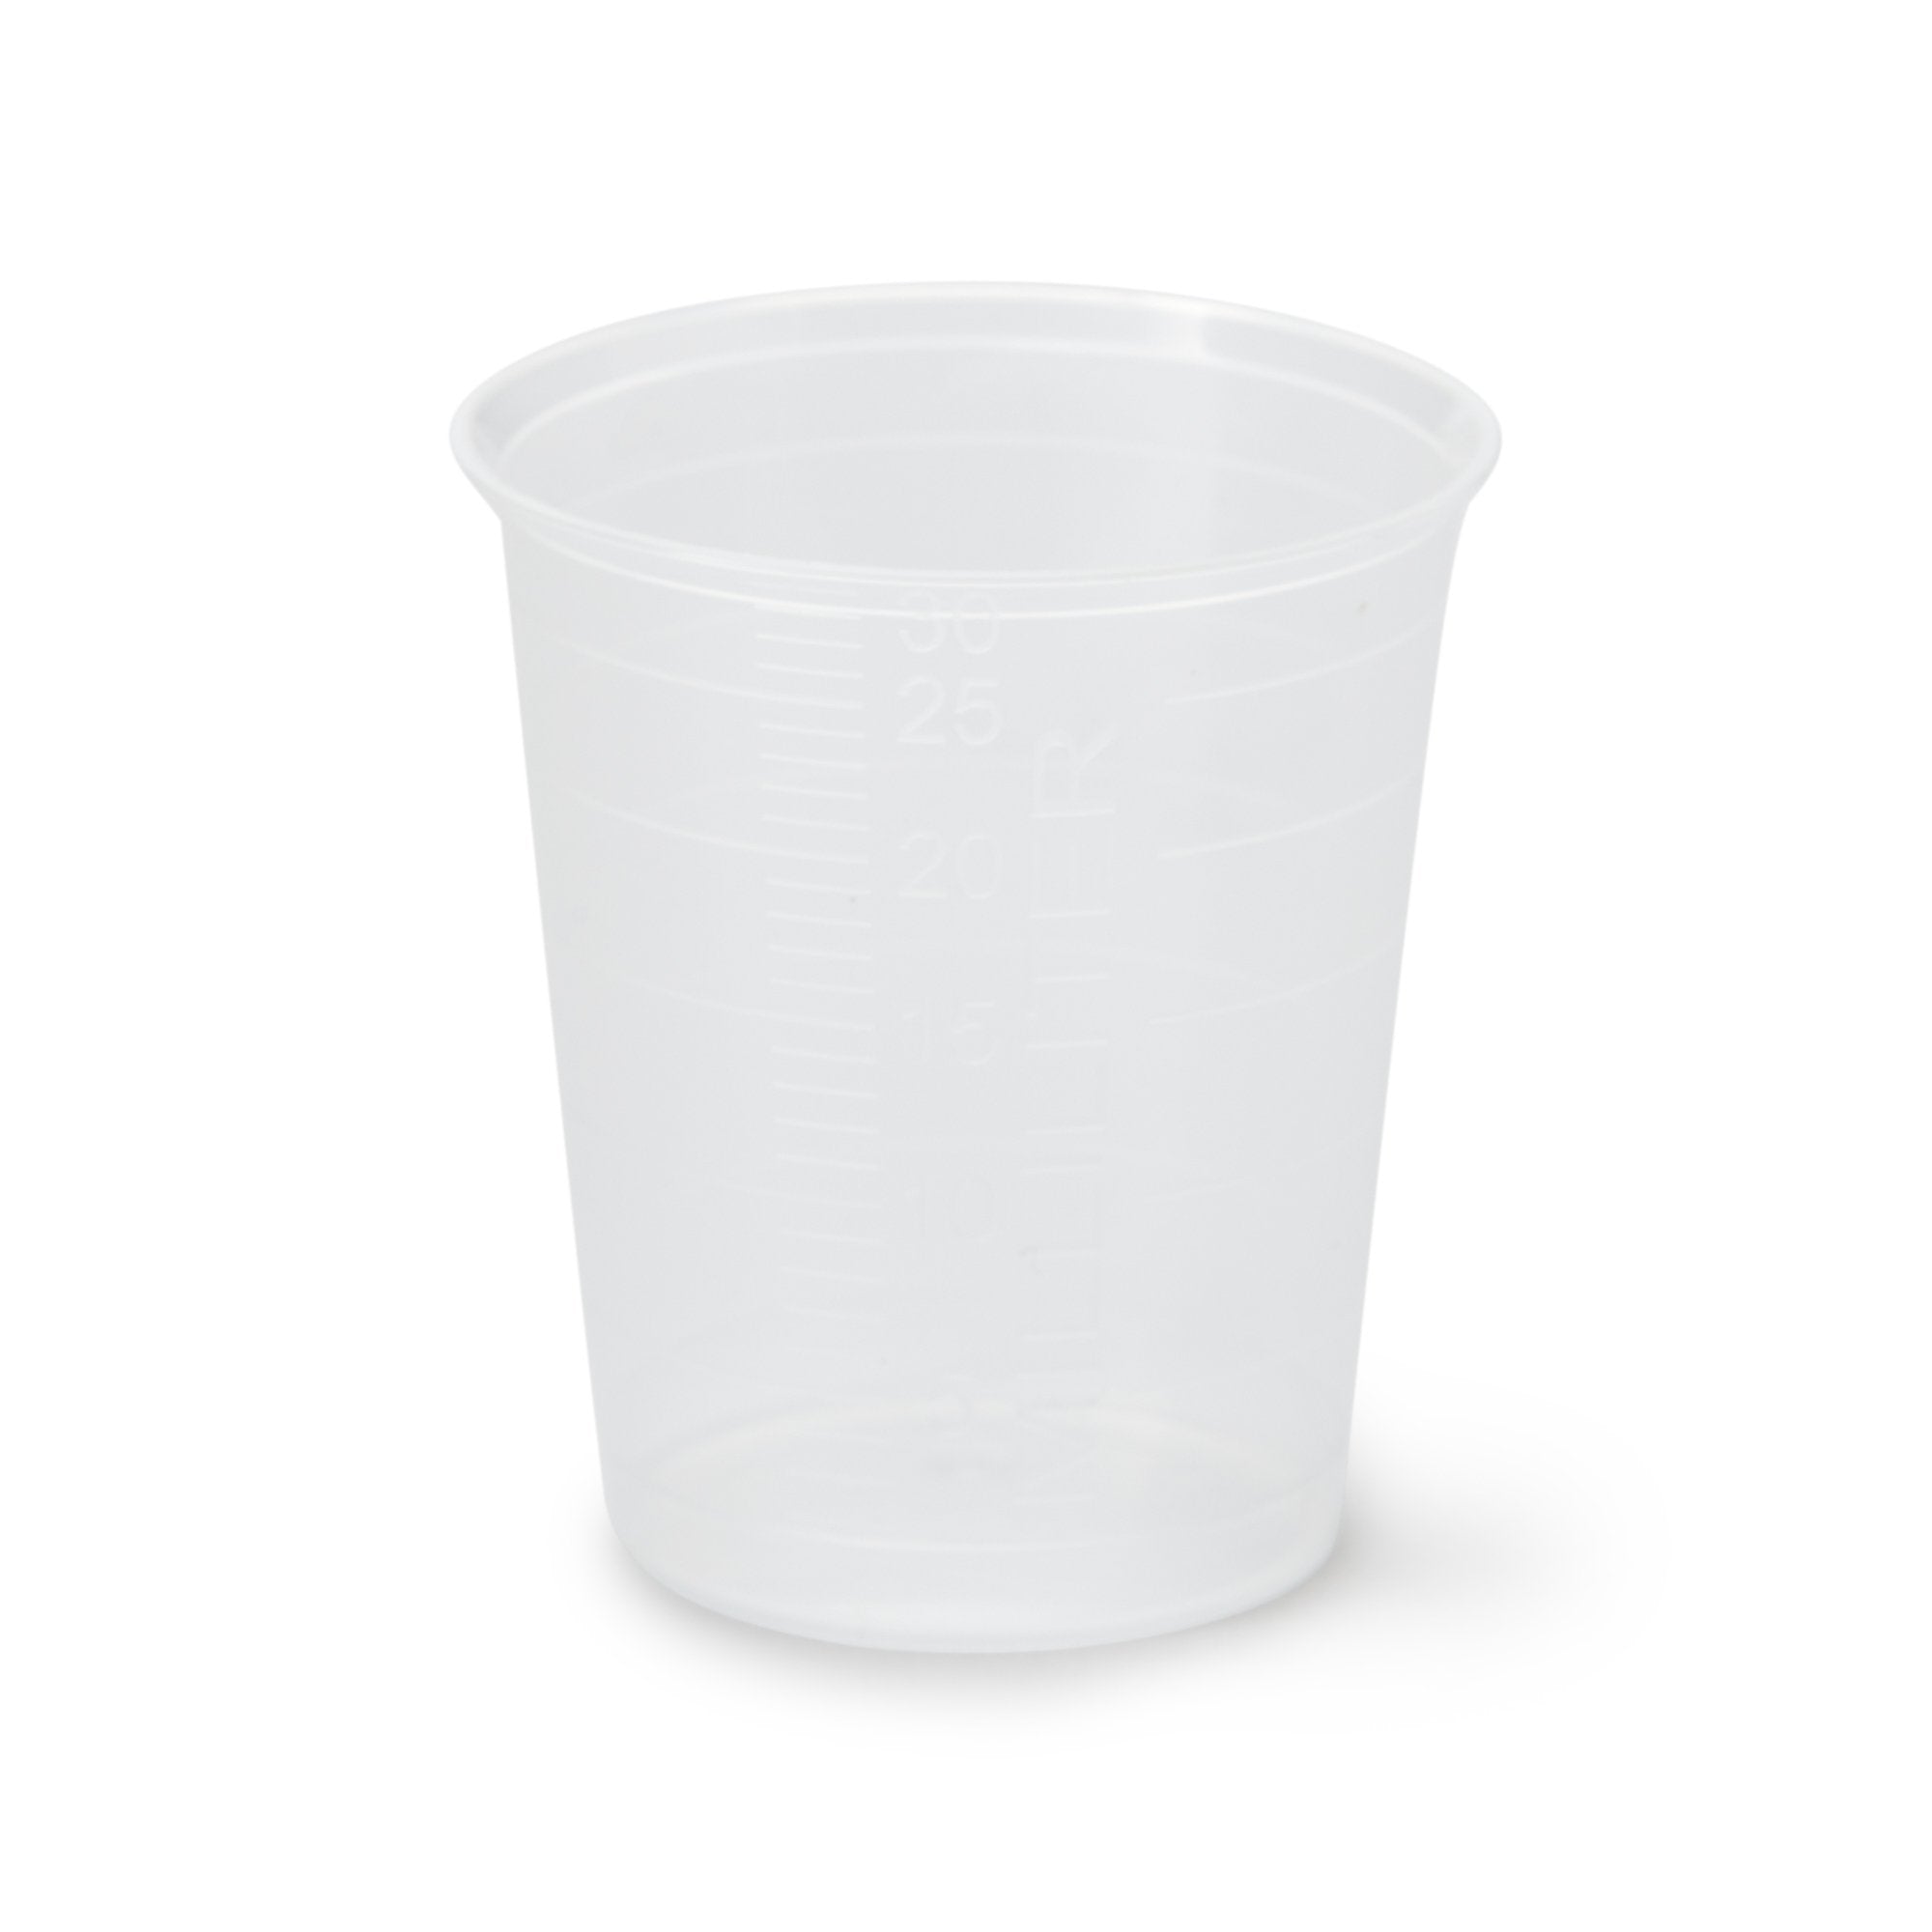 Graduated Medicine Cup Narrow 1 oz. Clear Plastic Disposable